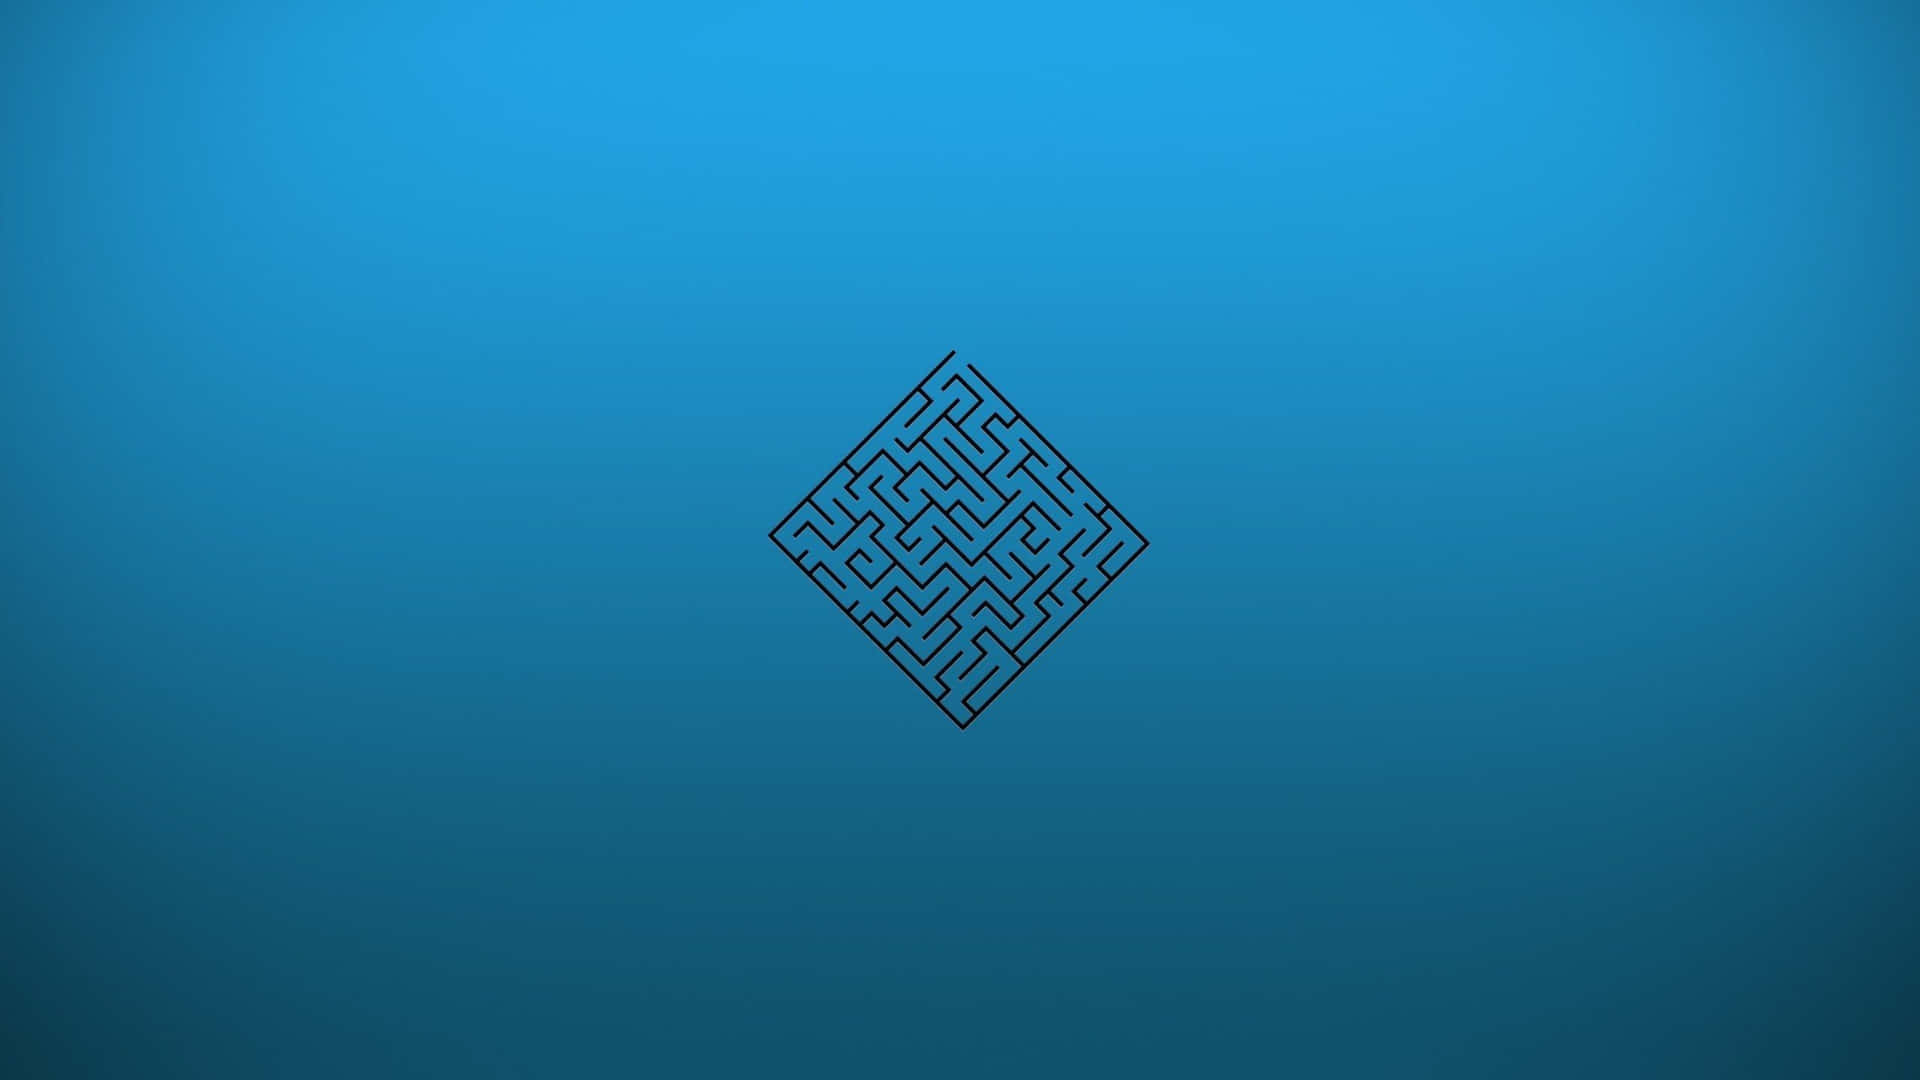 4k Minimal Blue Maze Puzzle Wallpaper